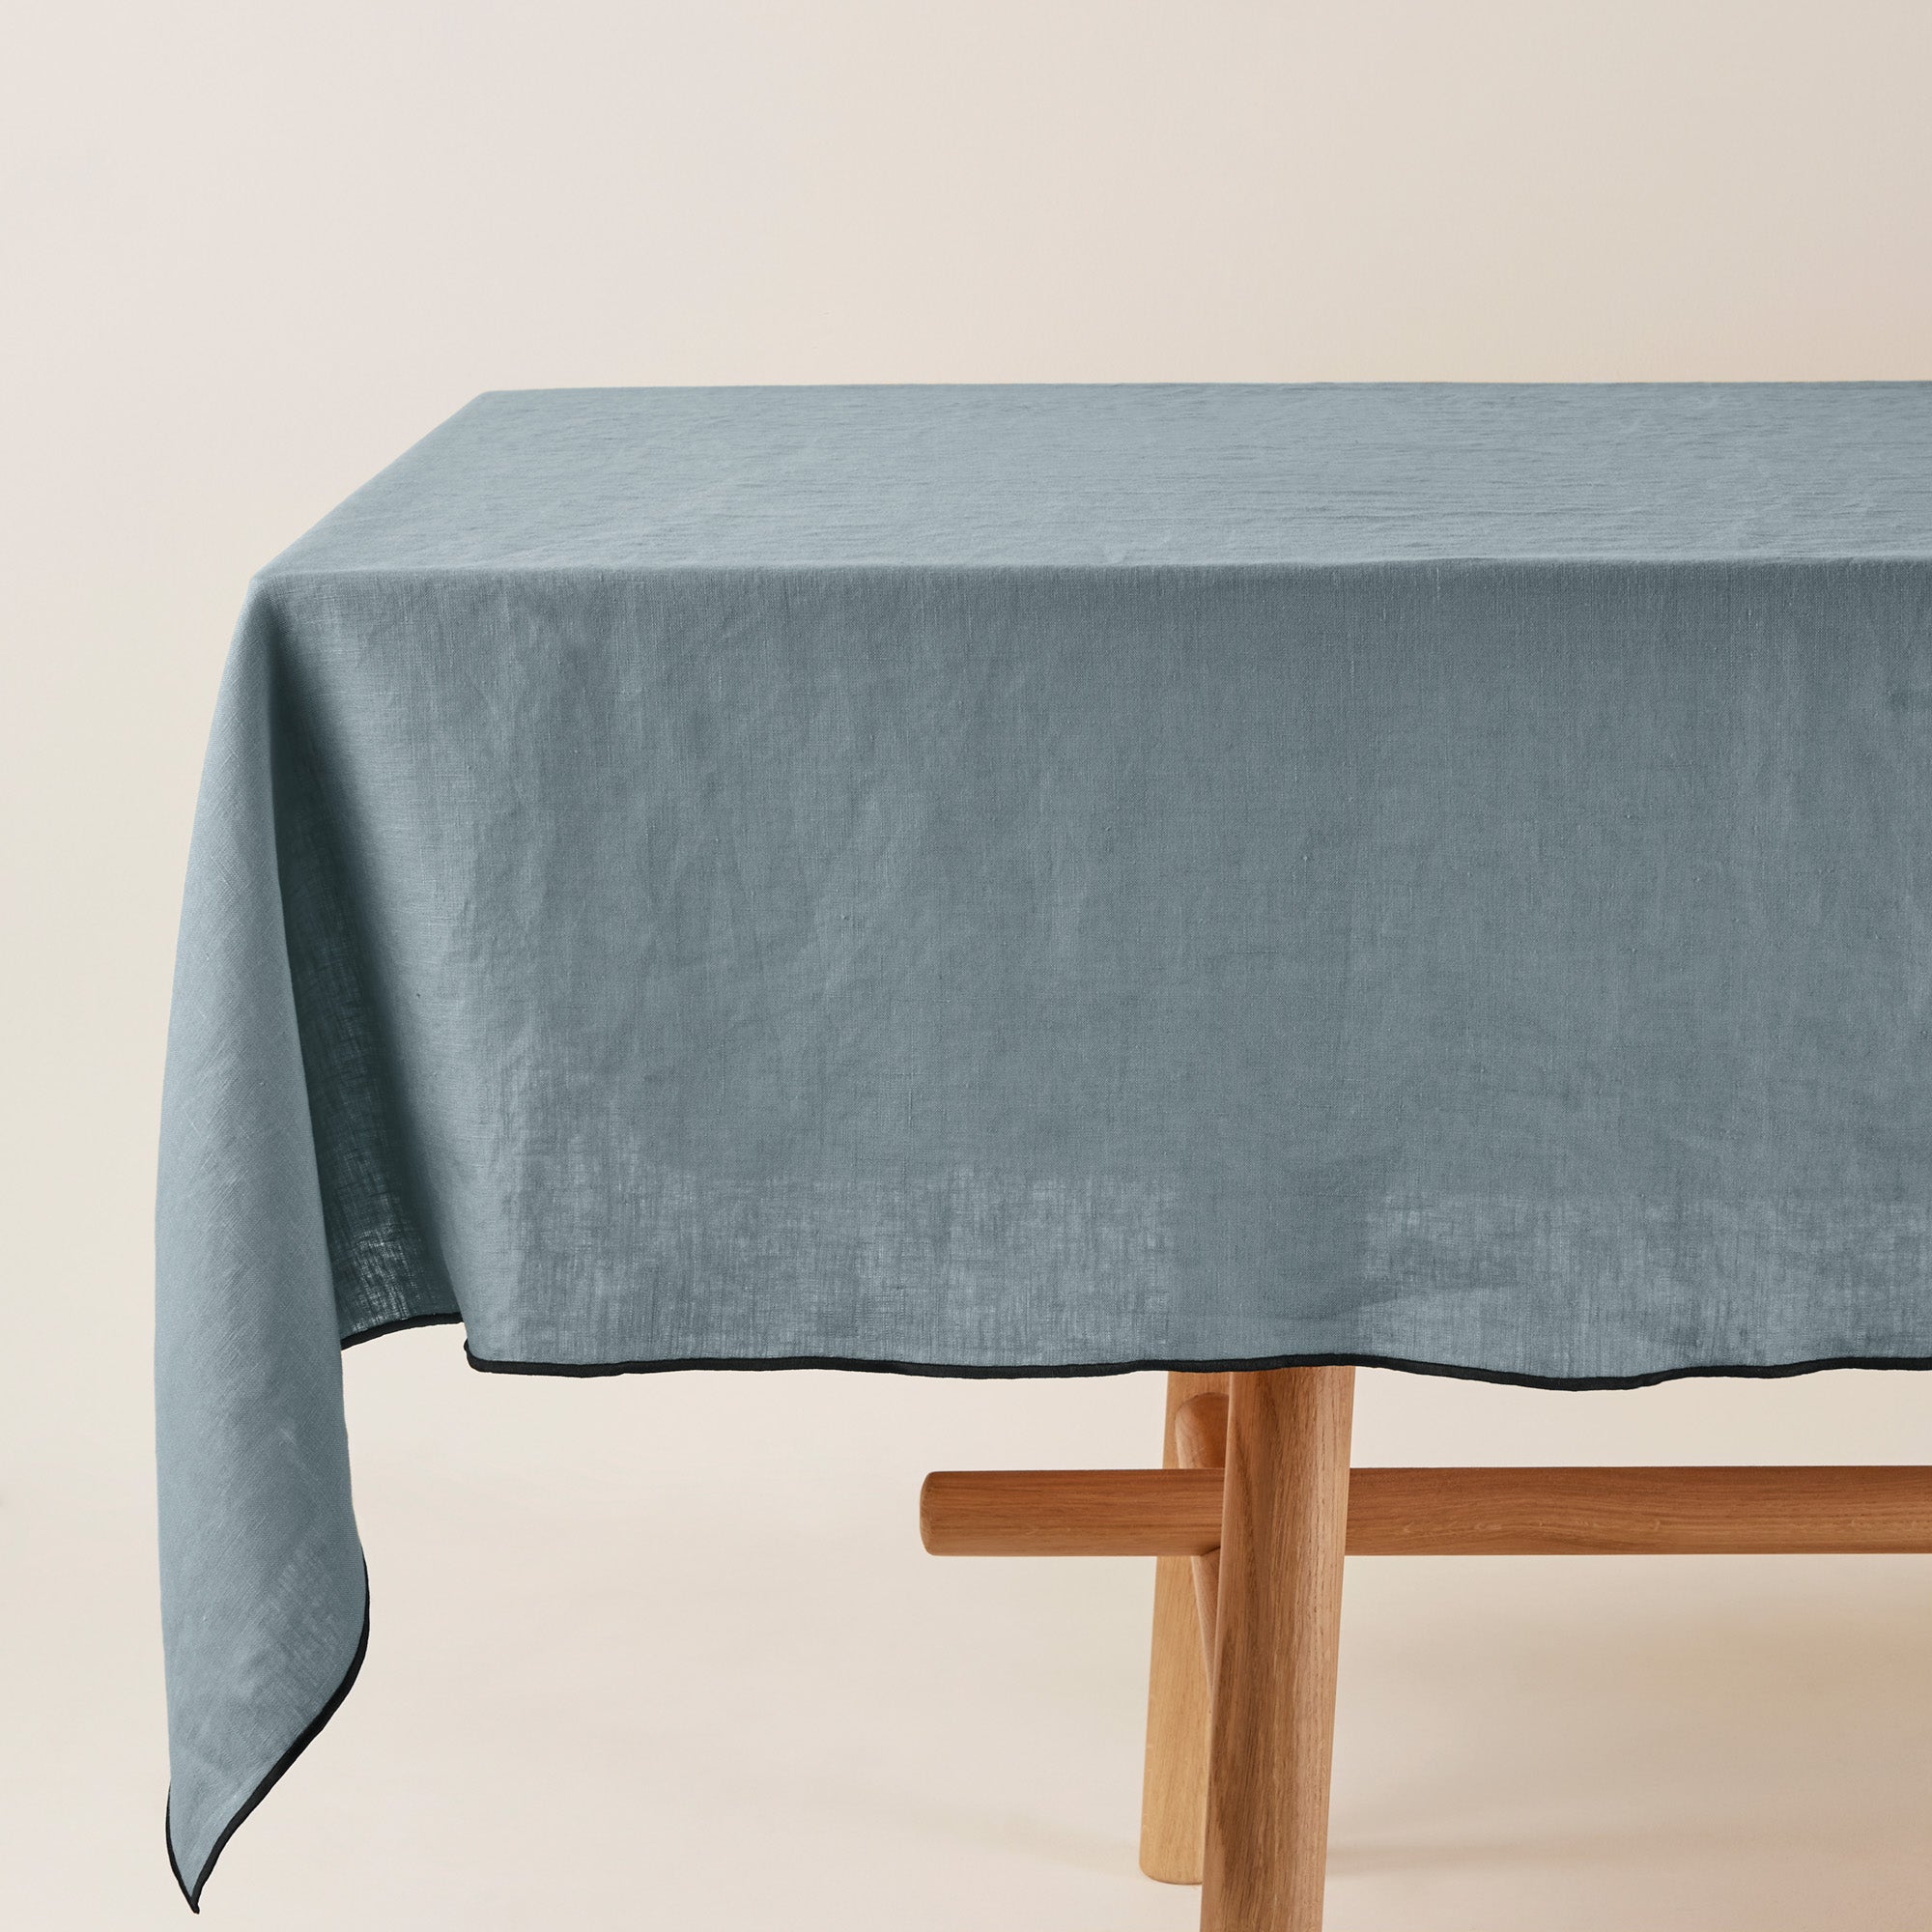 Carlina grey green and black bourdon stitch rectangular tablecloth